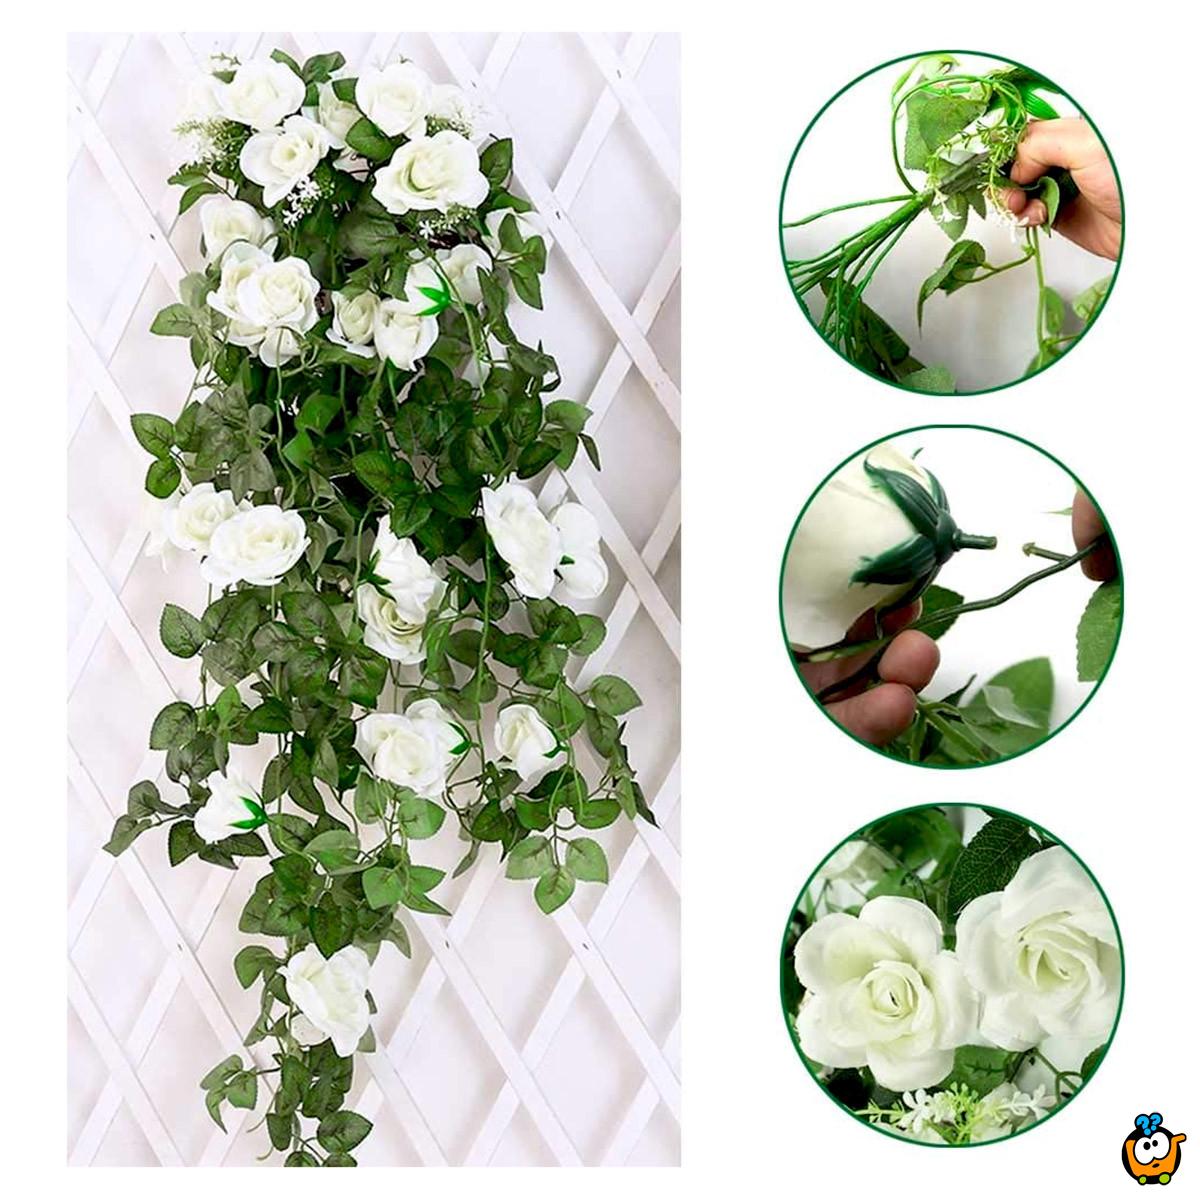 Rose Romance buket belih visećih ruža - dekorativno veštačko cveće